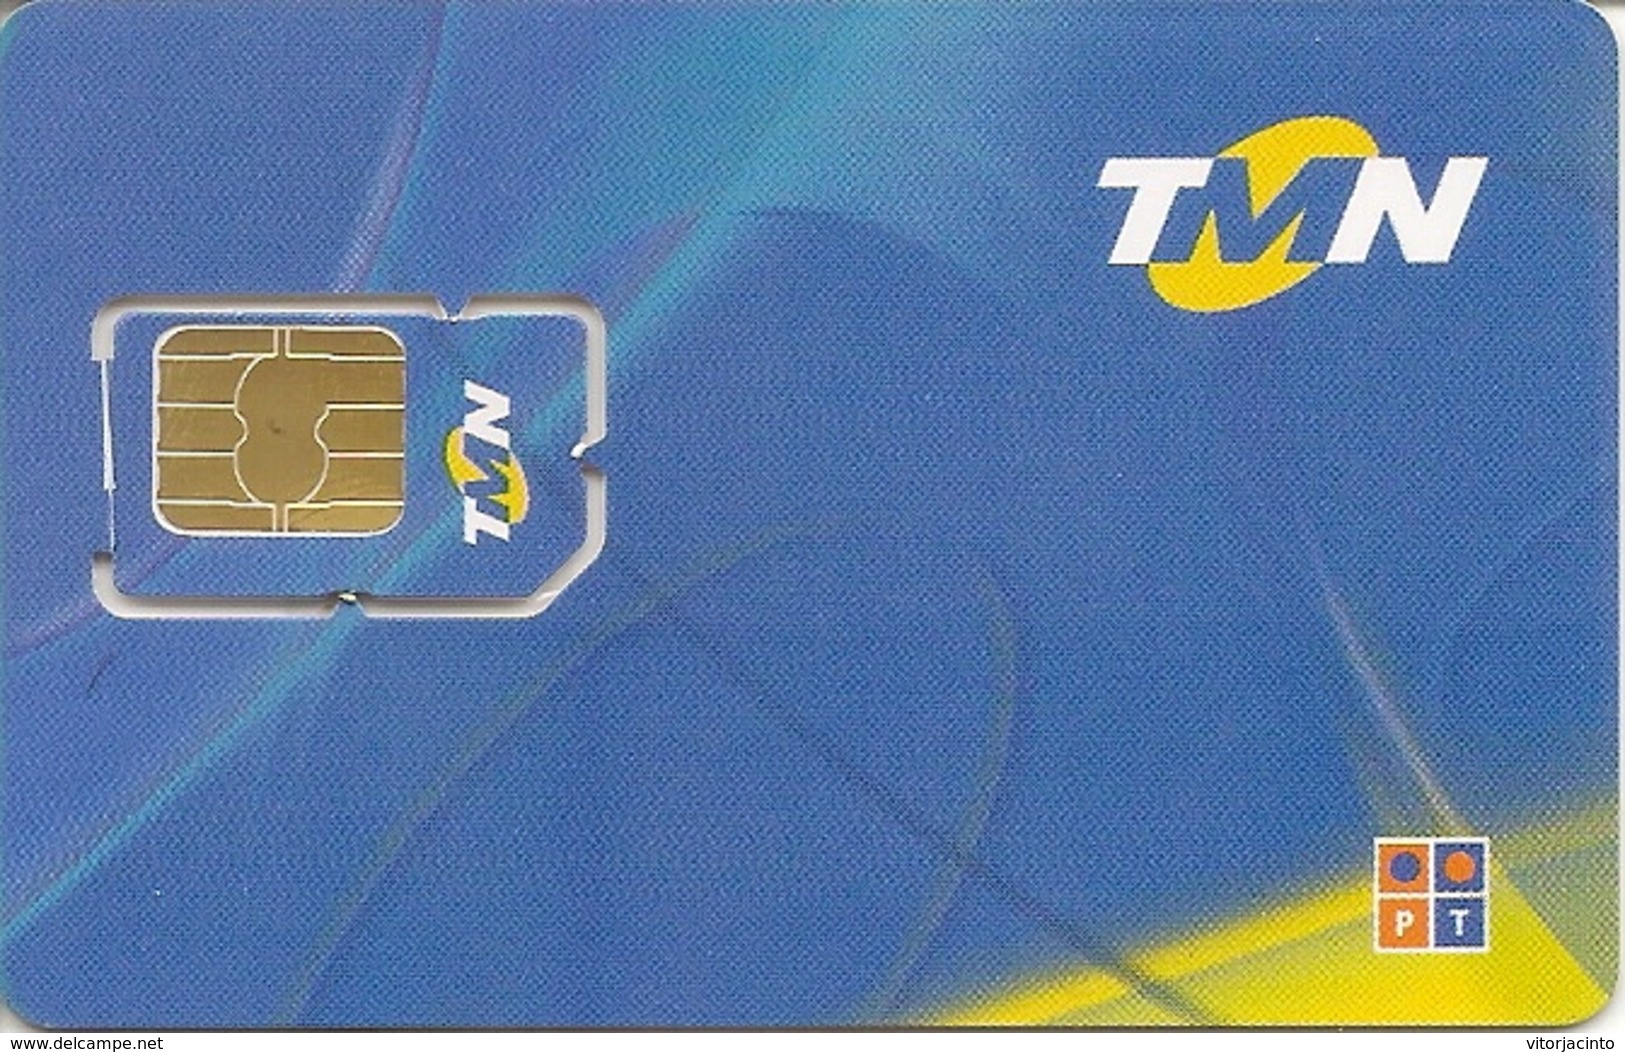 Mobile Phonecard - TMN PT - Portugal - Portugal